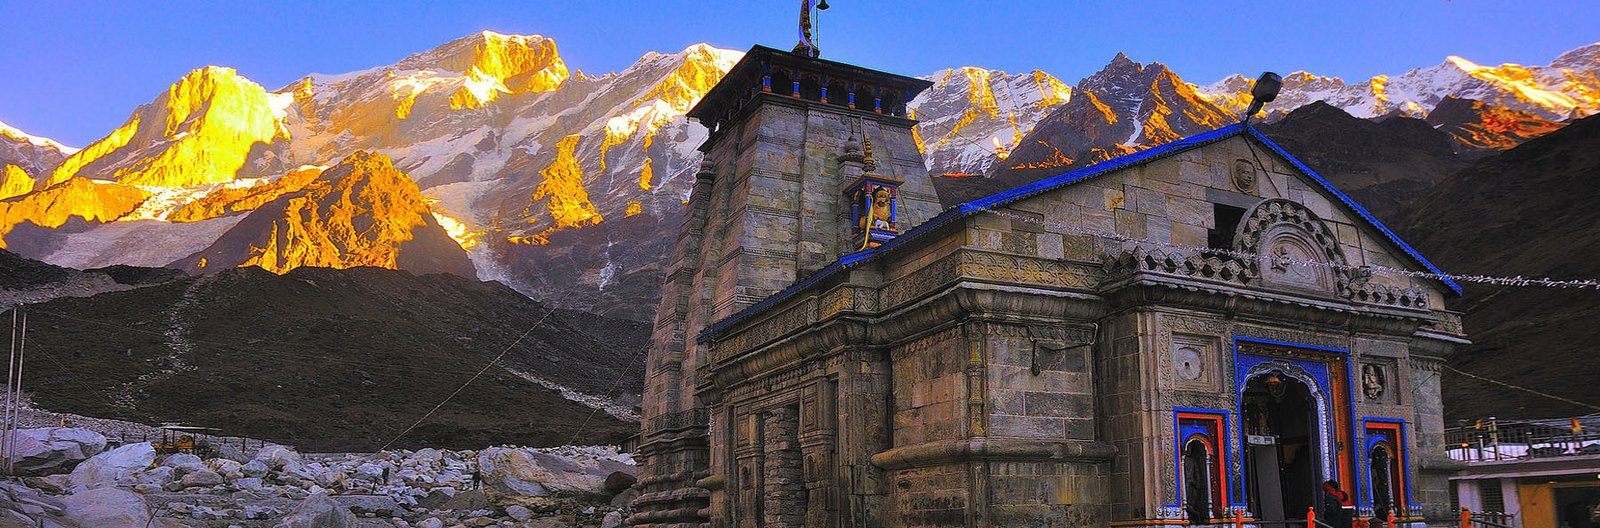 Kedarnath Dham Yatra 2020 - Kedarnath Temple & Yatra Travel Guide ...